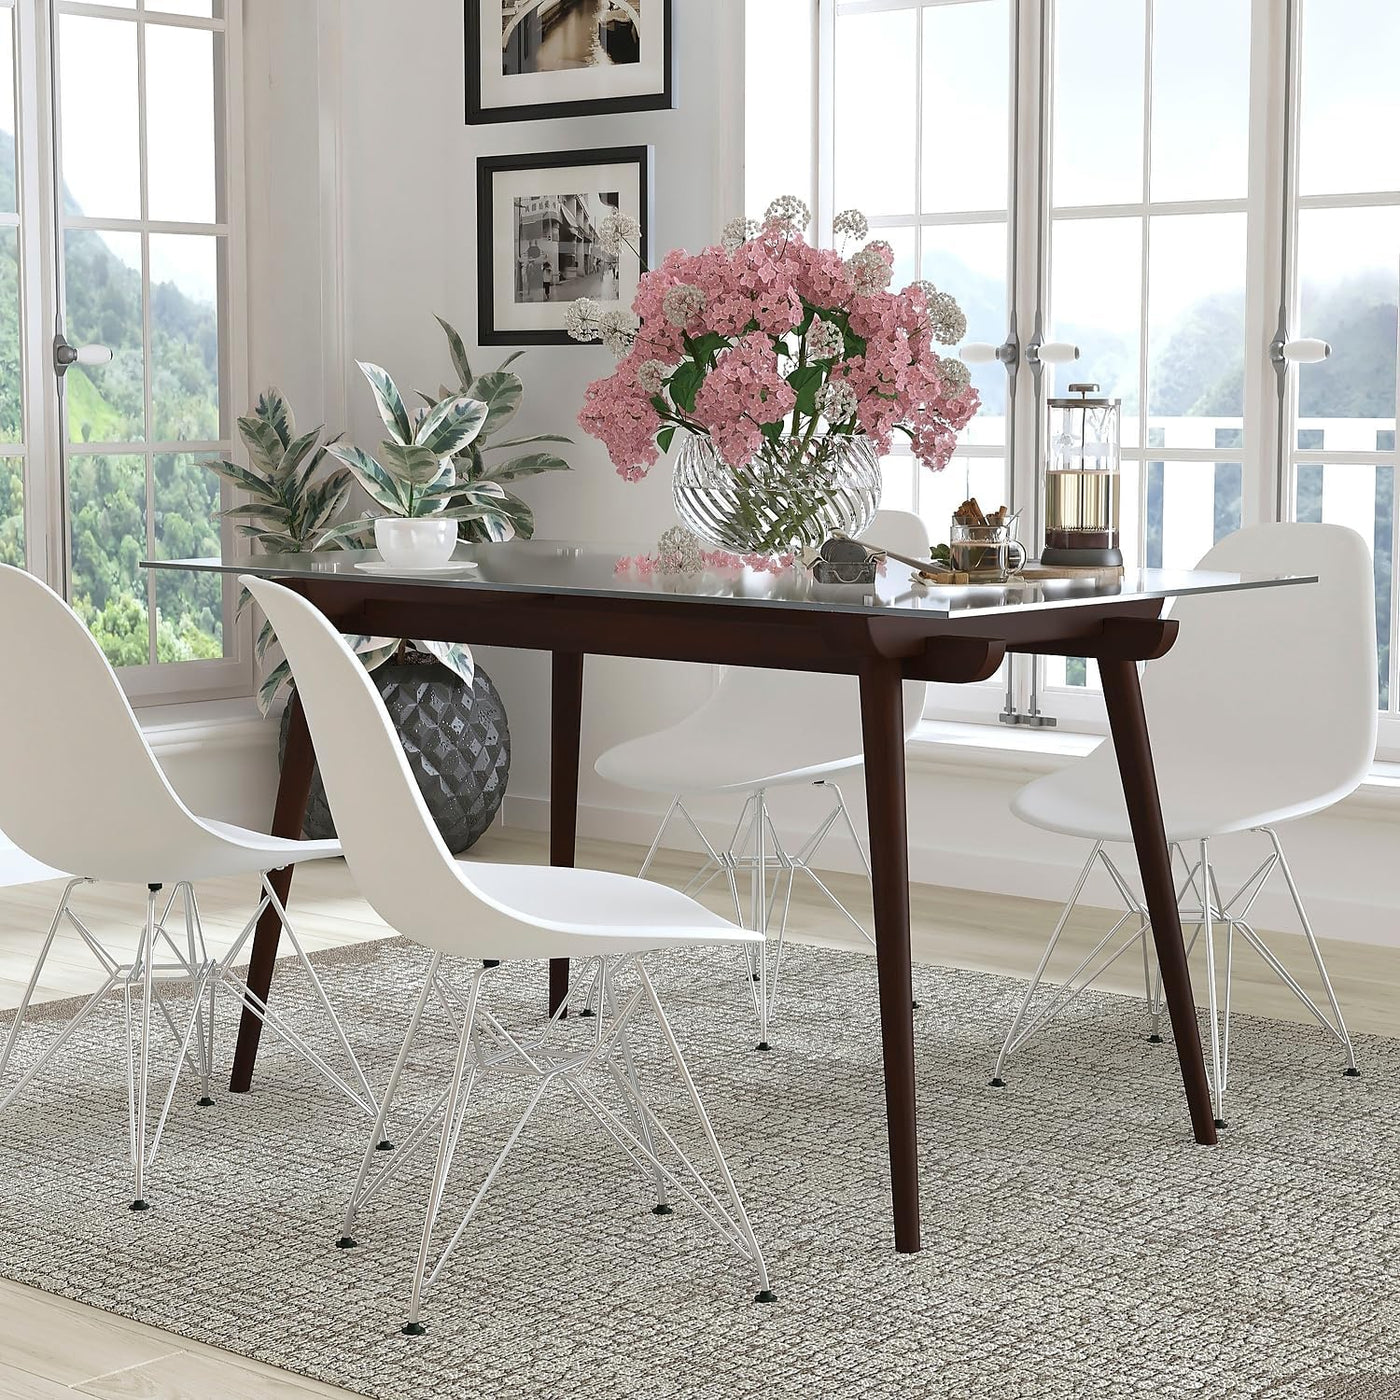 Flash Furniture Meriden 31.5" x 55" Rectangular Solid Espresso Wood Table with Top - $150